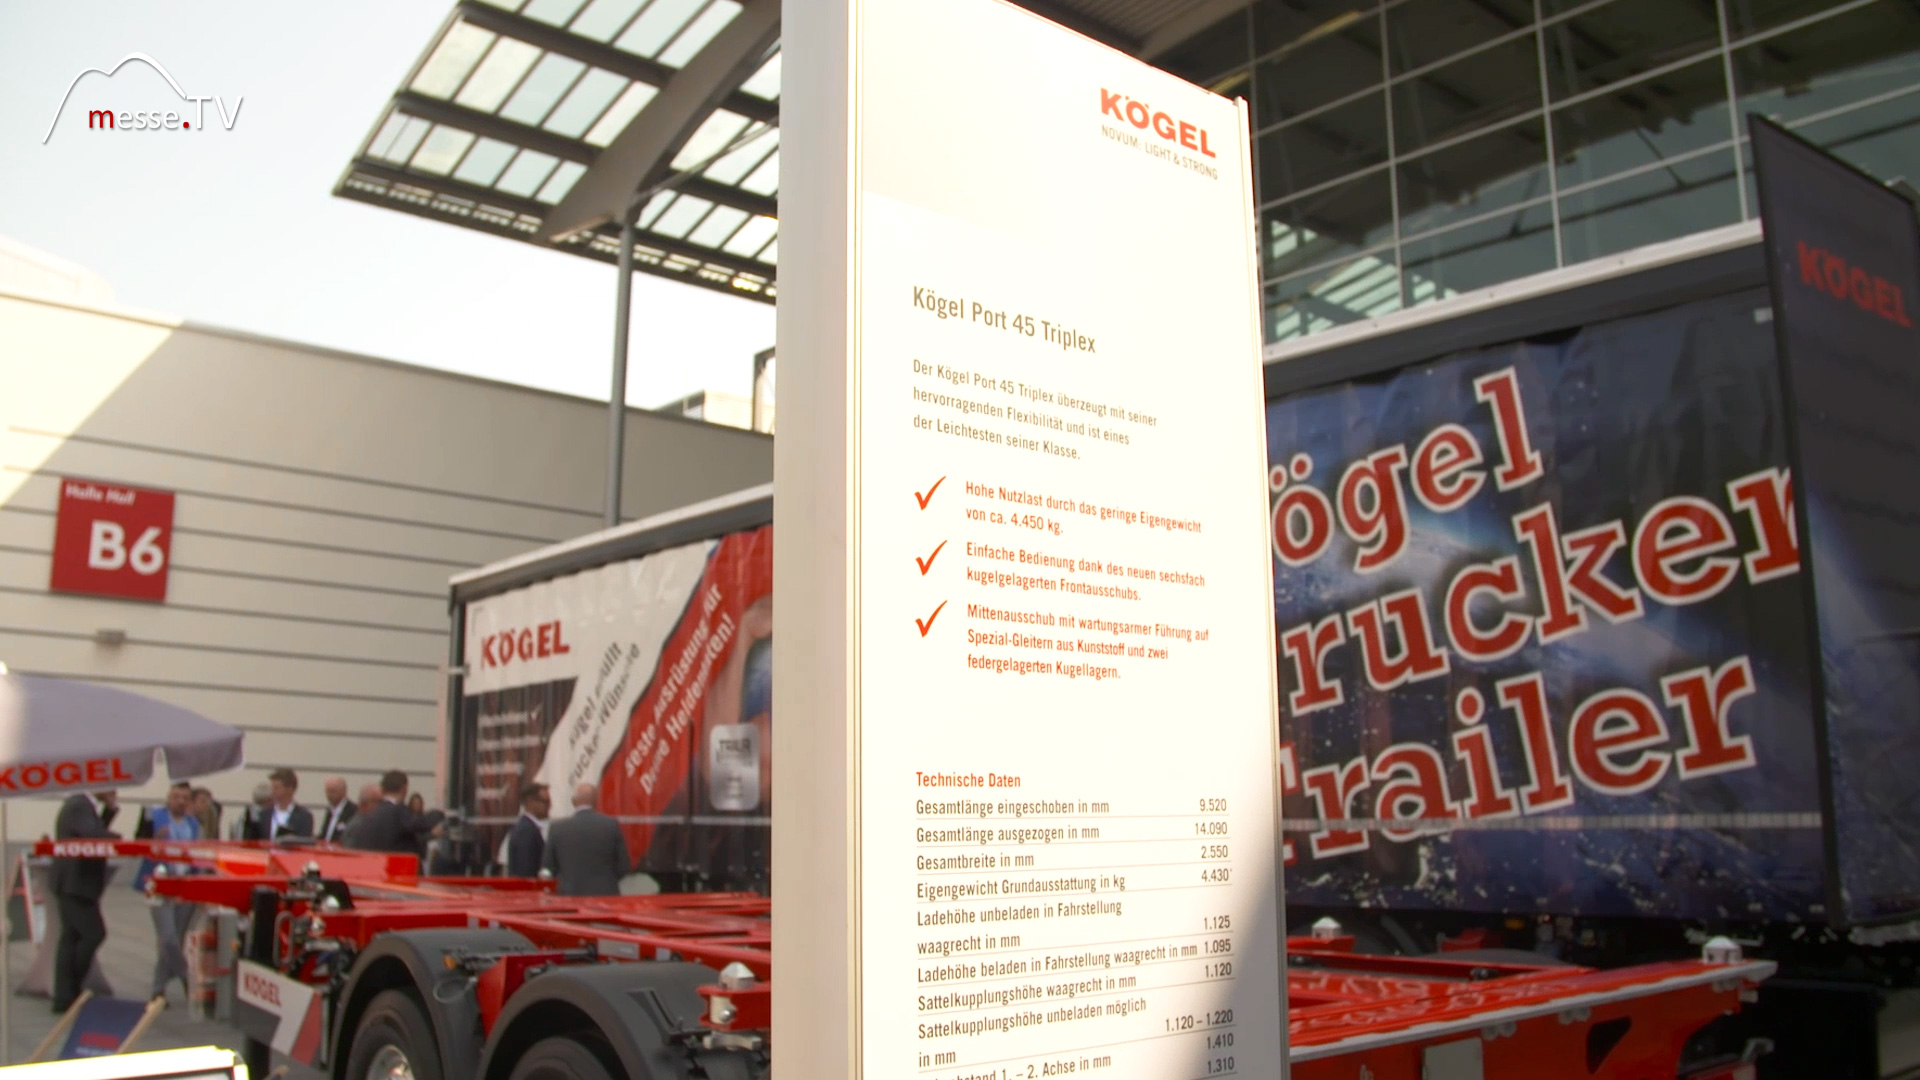 KOEGEL Trailer transport logistic 2019 Messe Muenchen